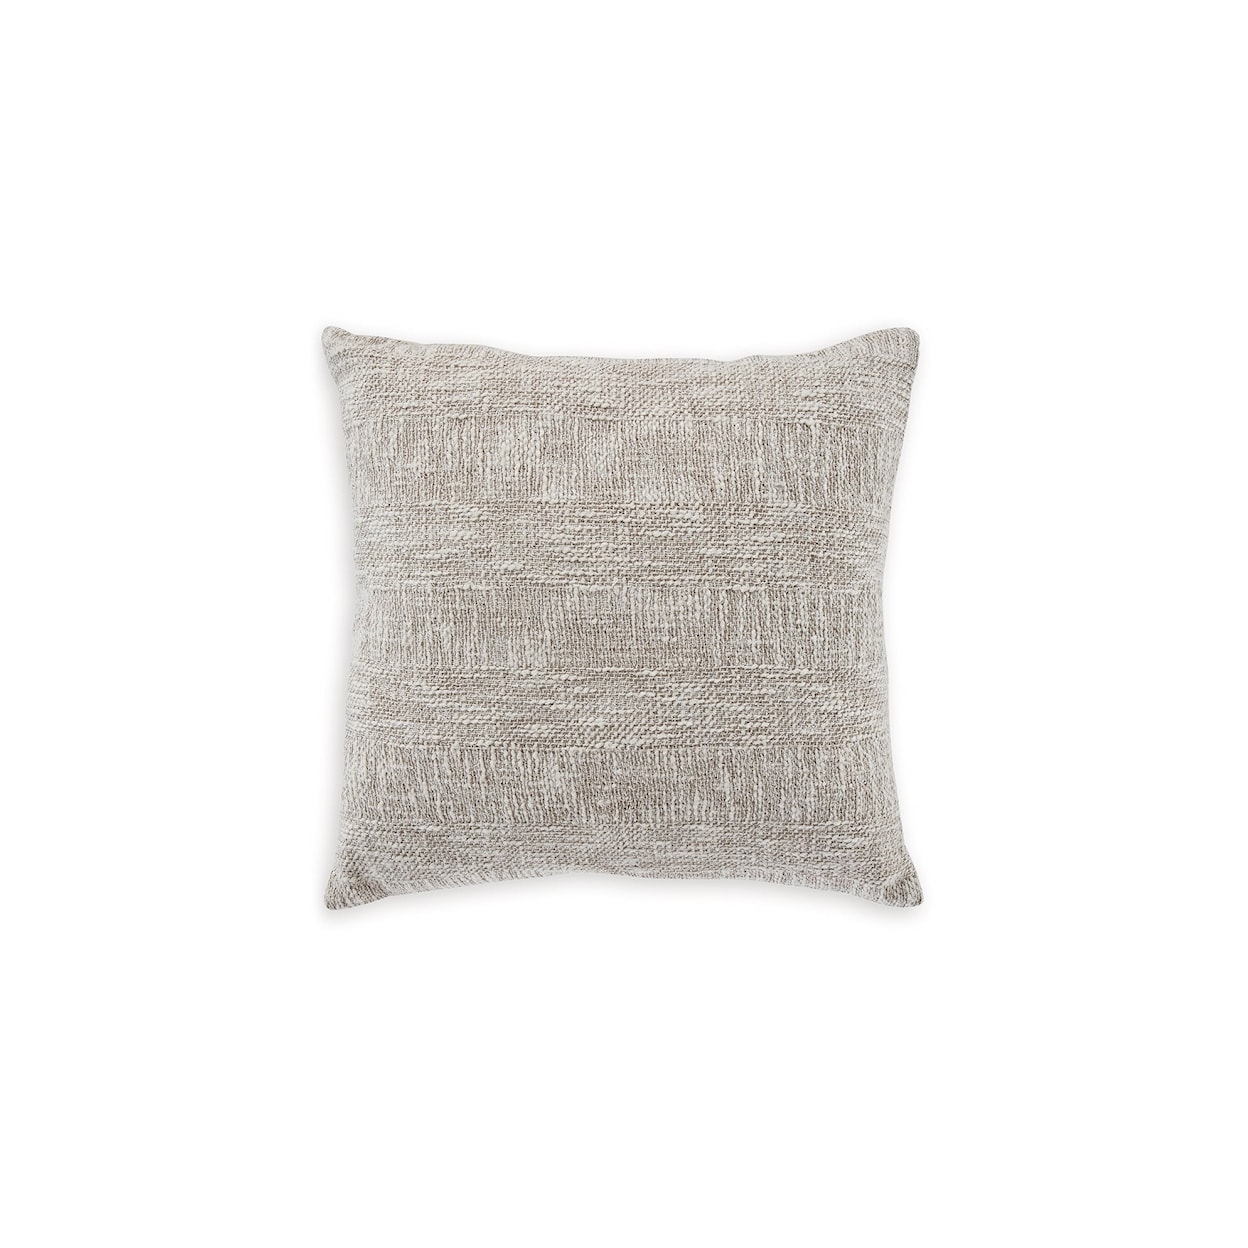 Ashley Furniture Signature Design Carddon Pillow